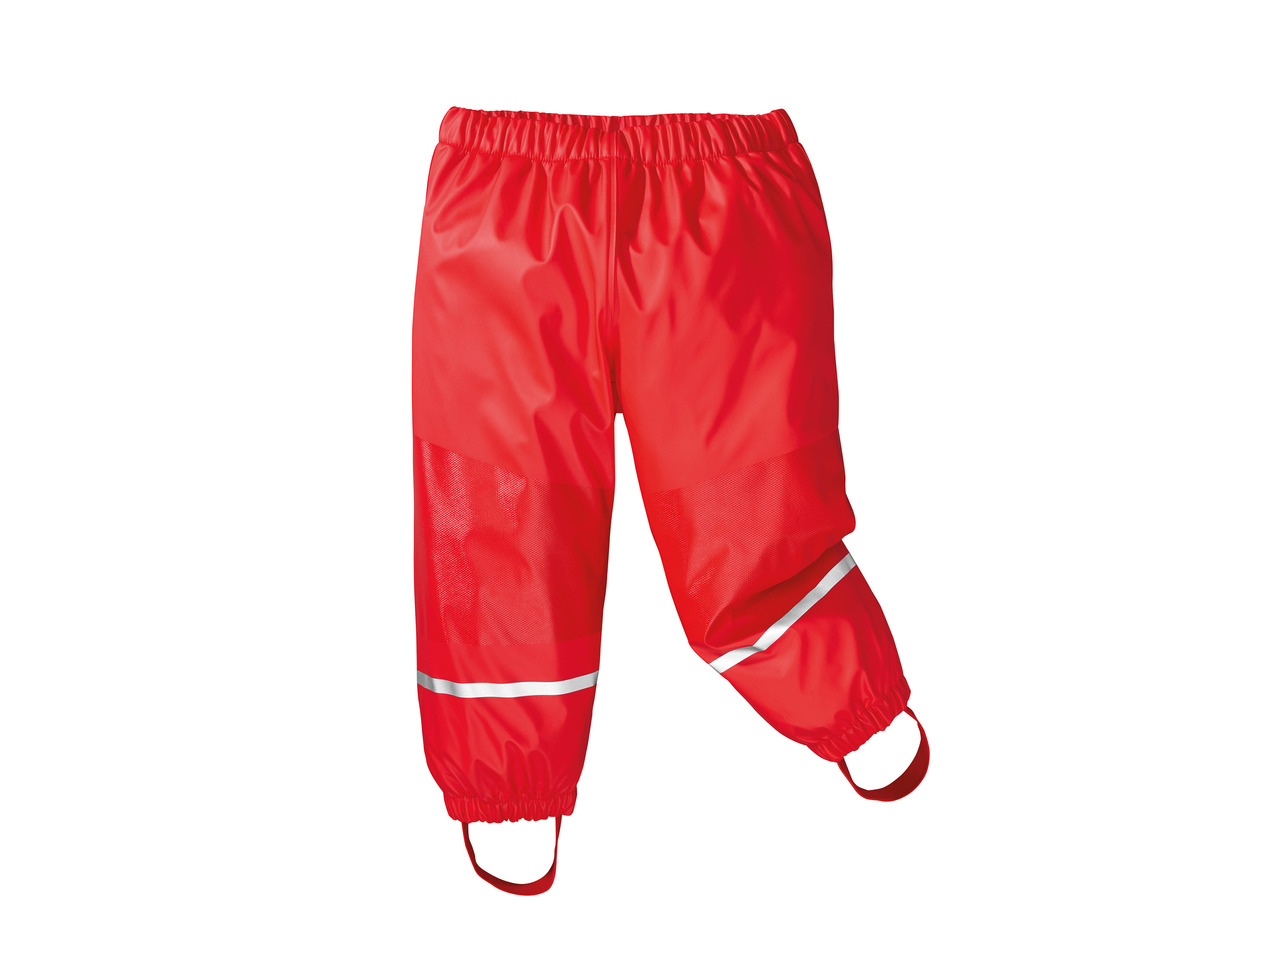 Lupilu Waterproof Trousers1